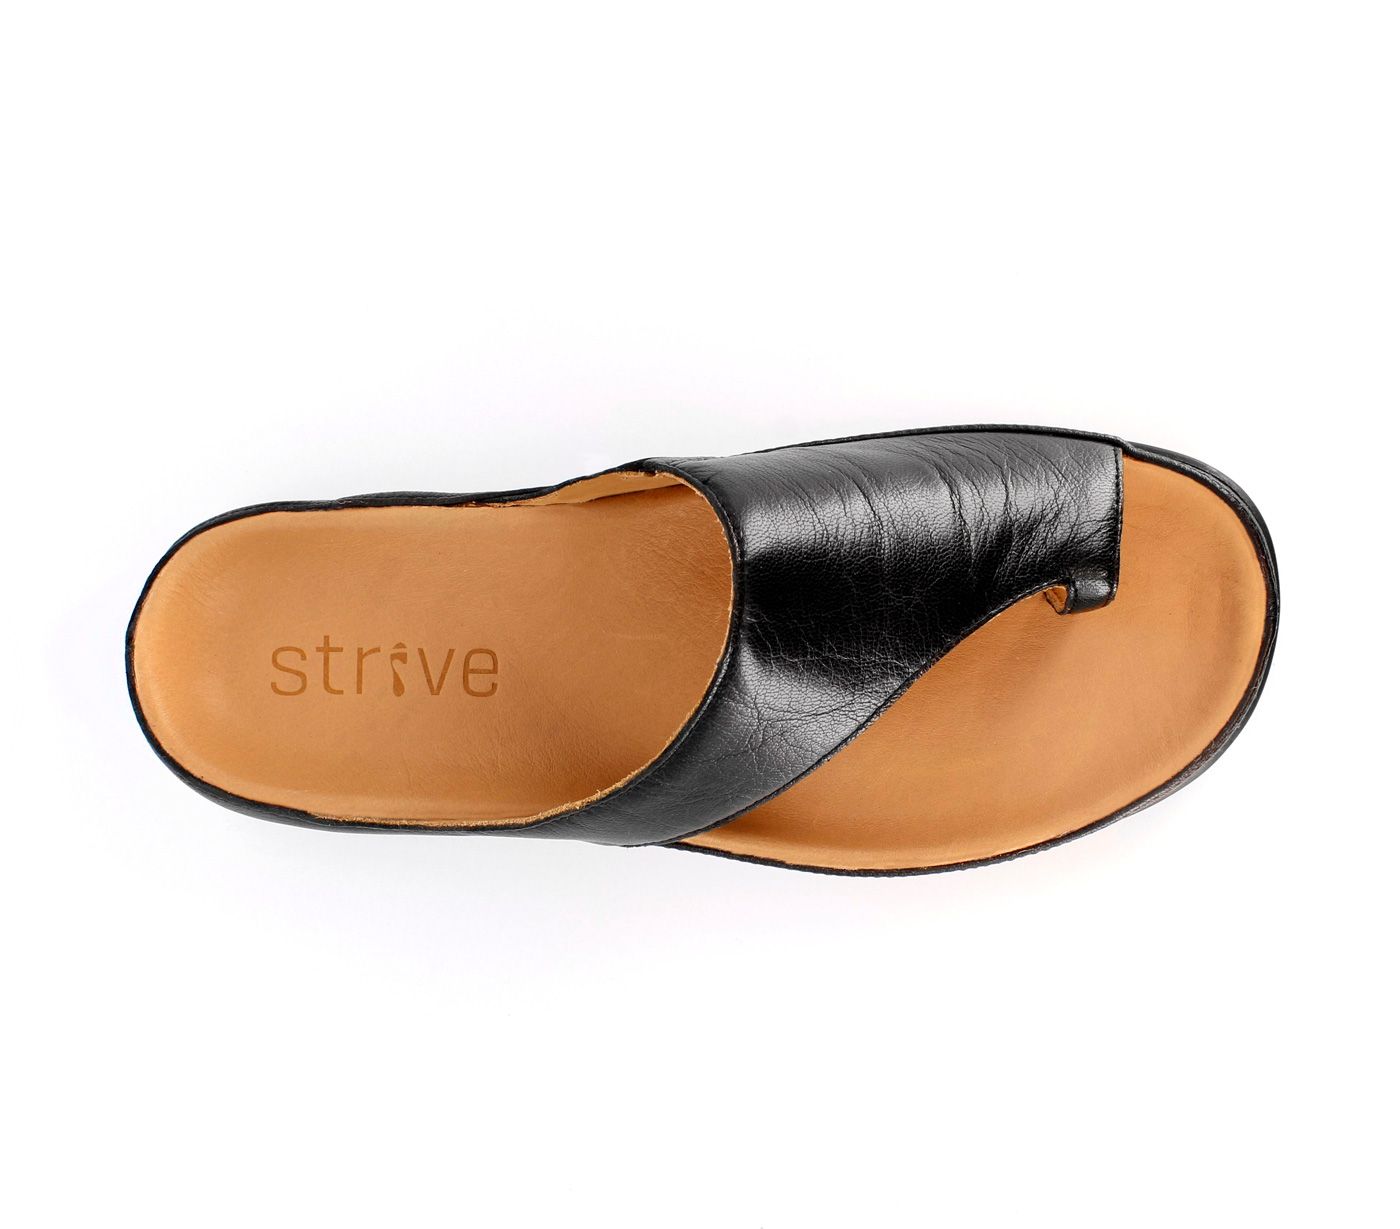 CAPRI BLACK | Strive Footwear | 'Capri' Black Orthotic Sandals at Brandy's Shoes Made in USA